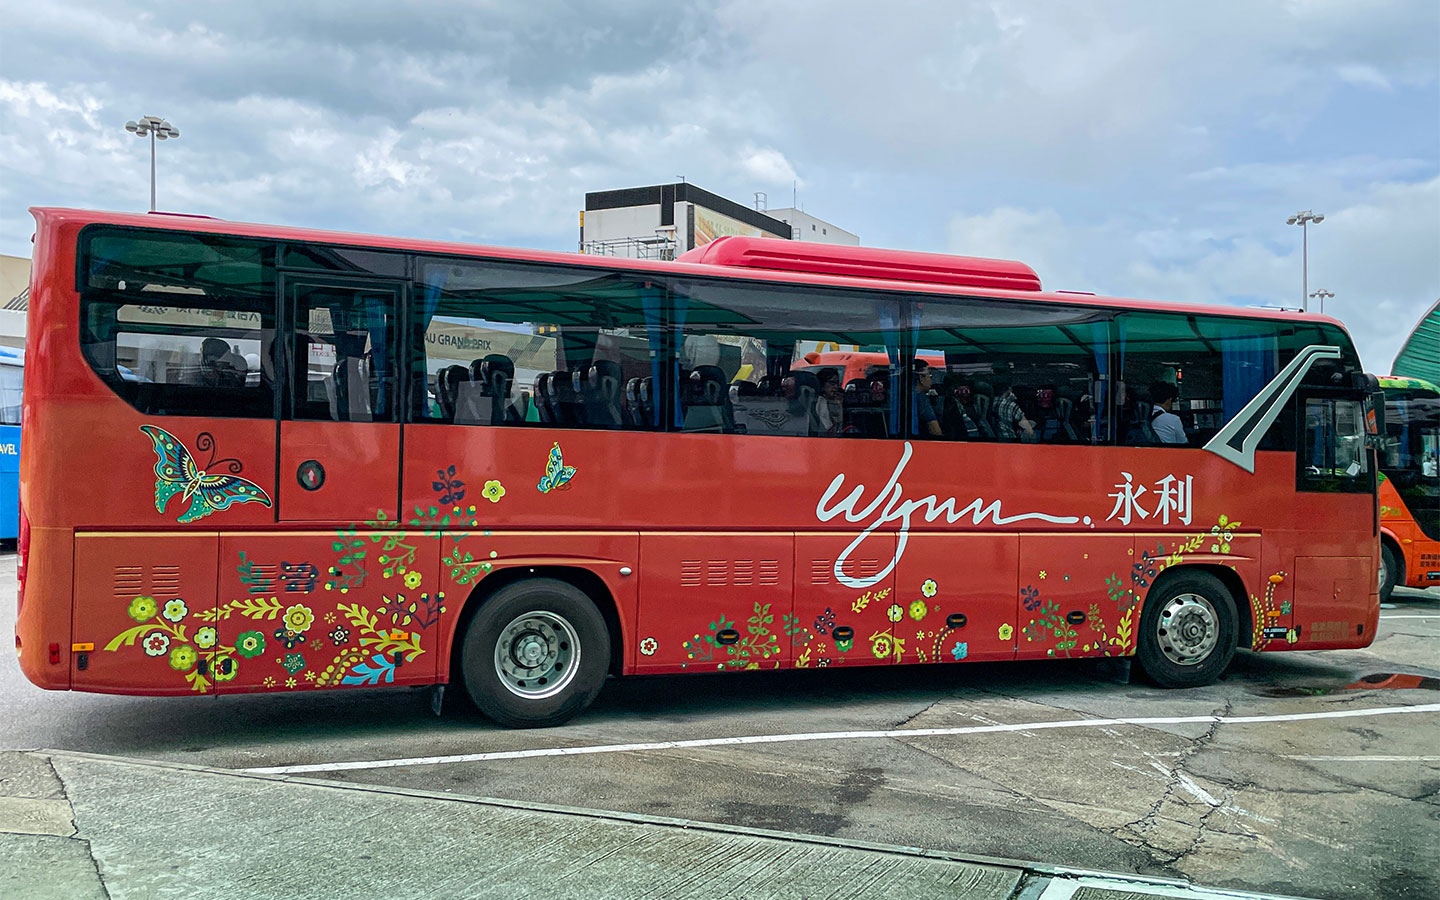 Macao casino hotel shuttle buses